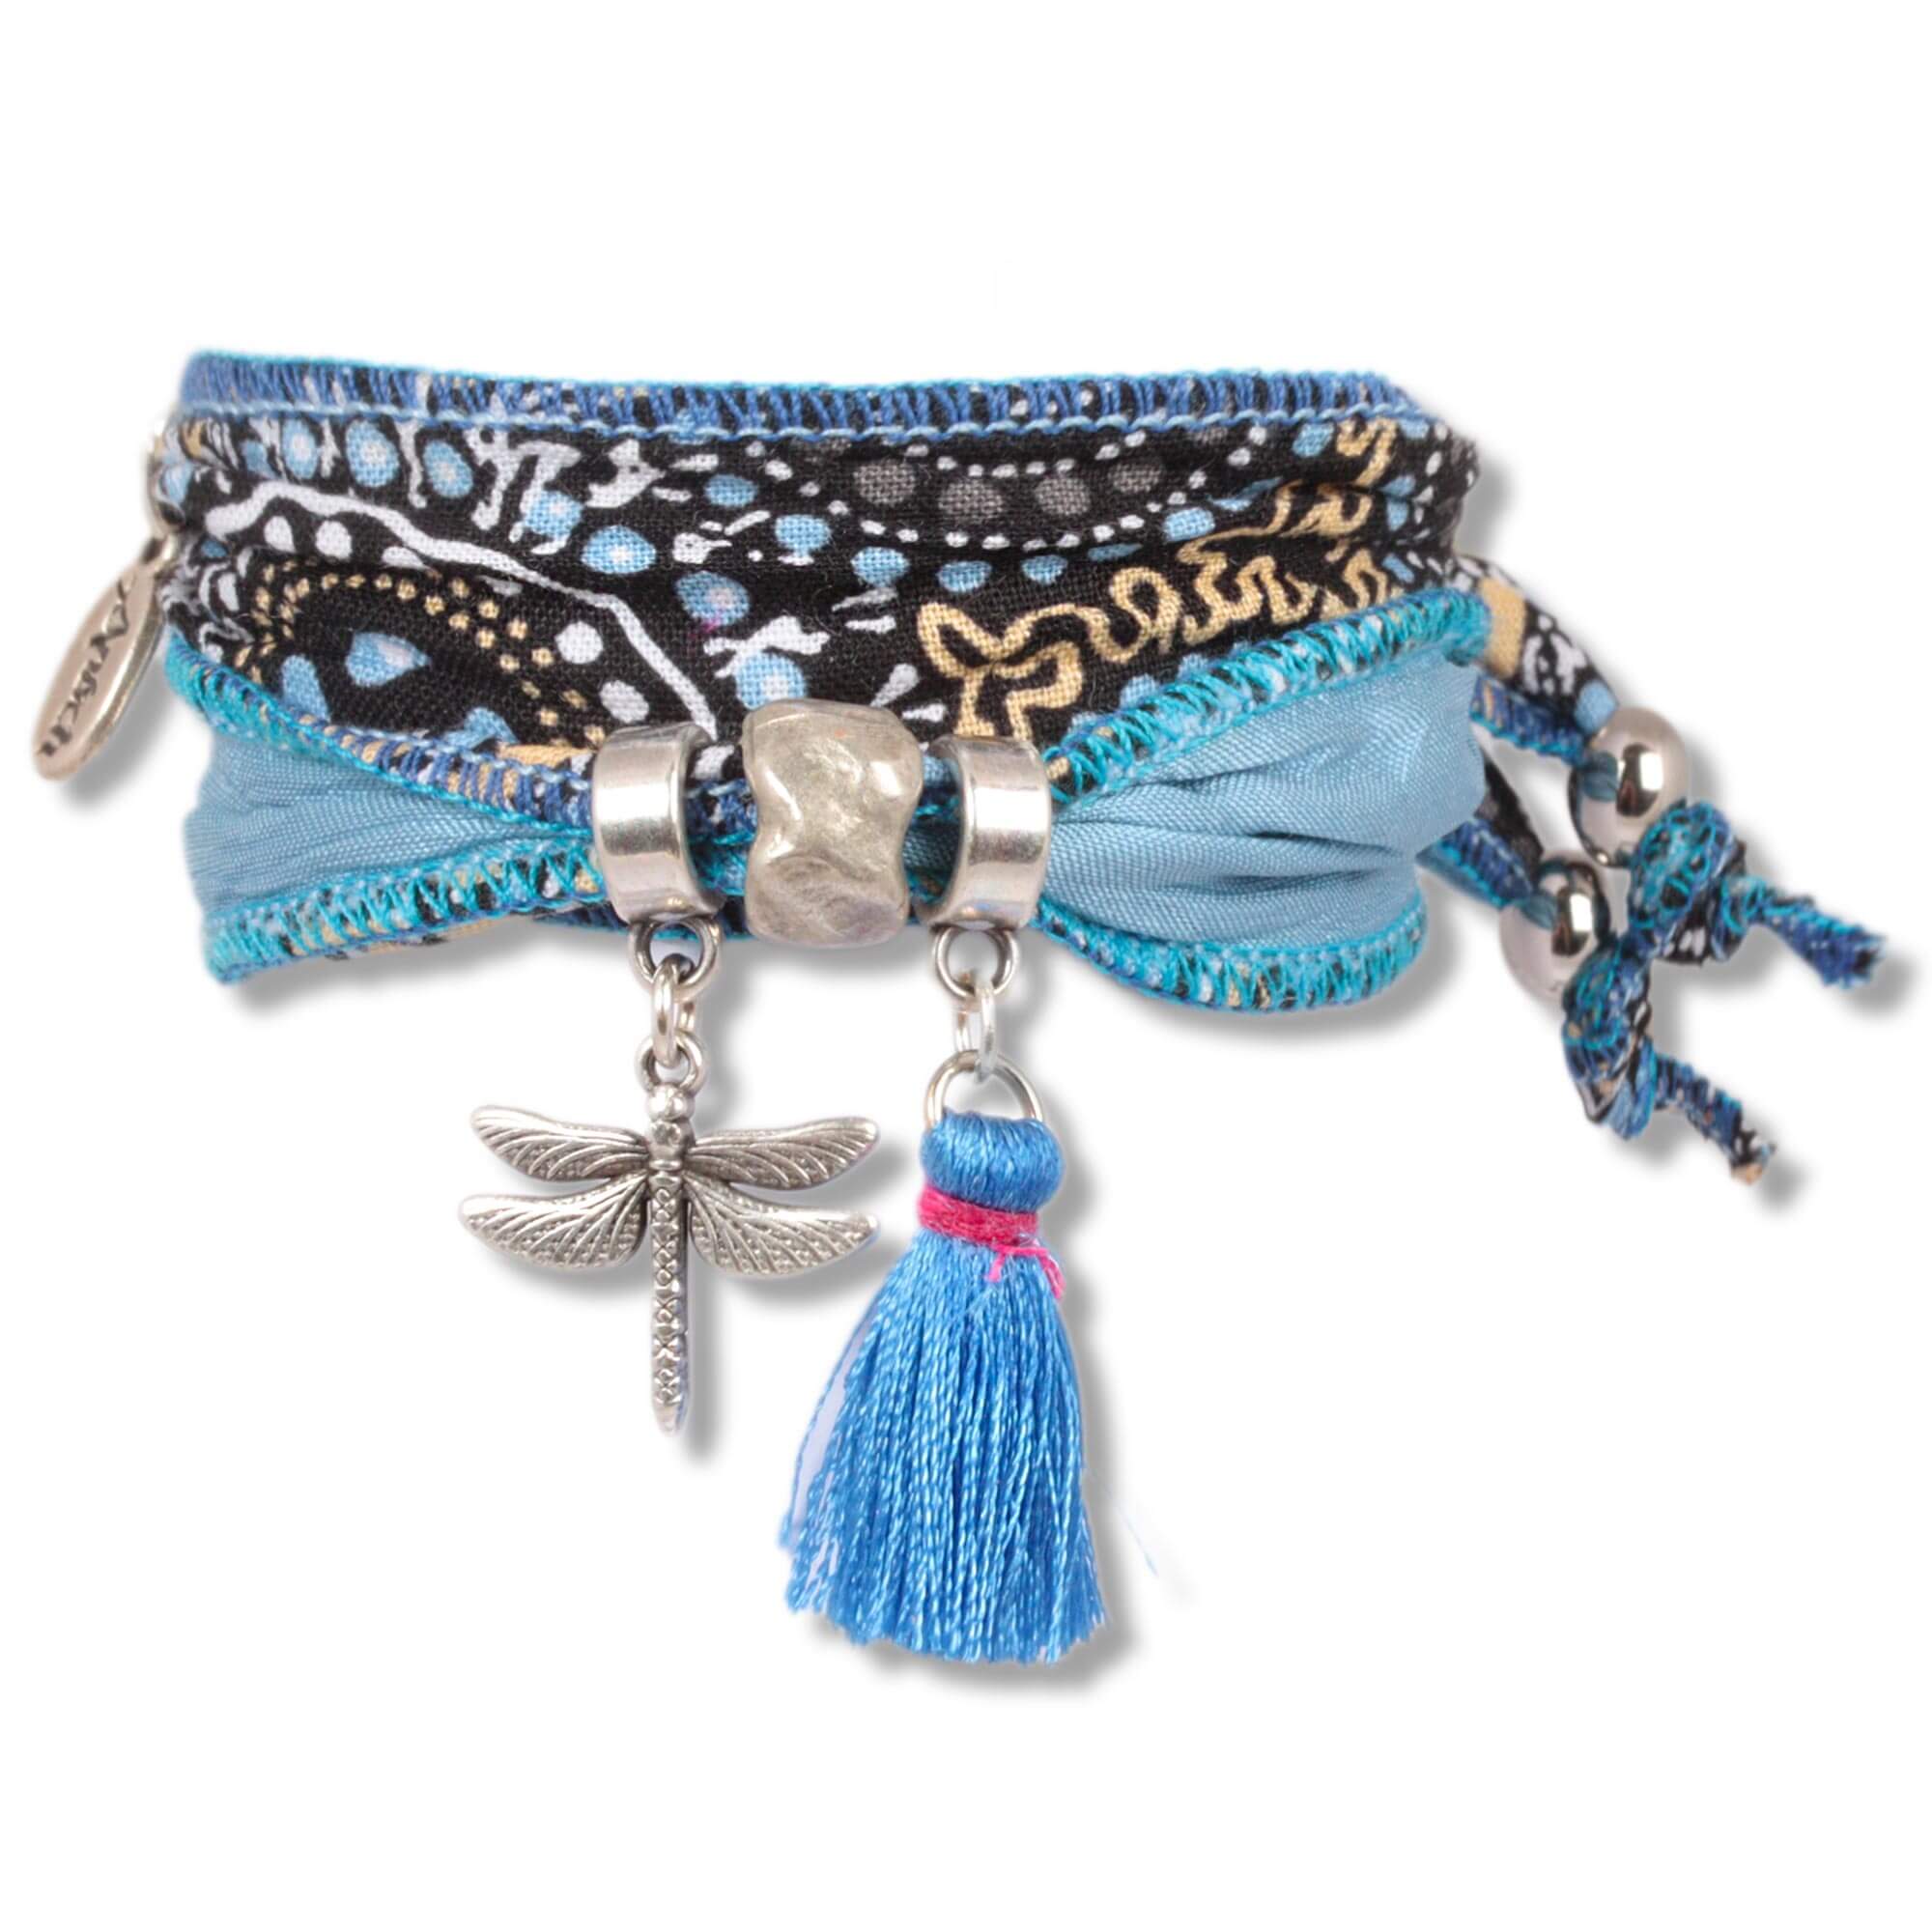 Blue Dancing Dragonfly - Artist bracelet made from aboriginal fabrics